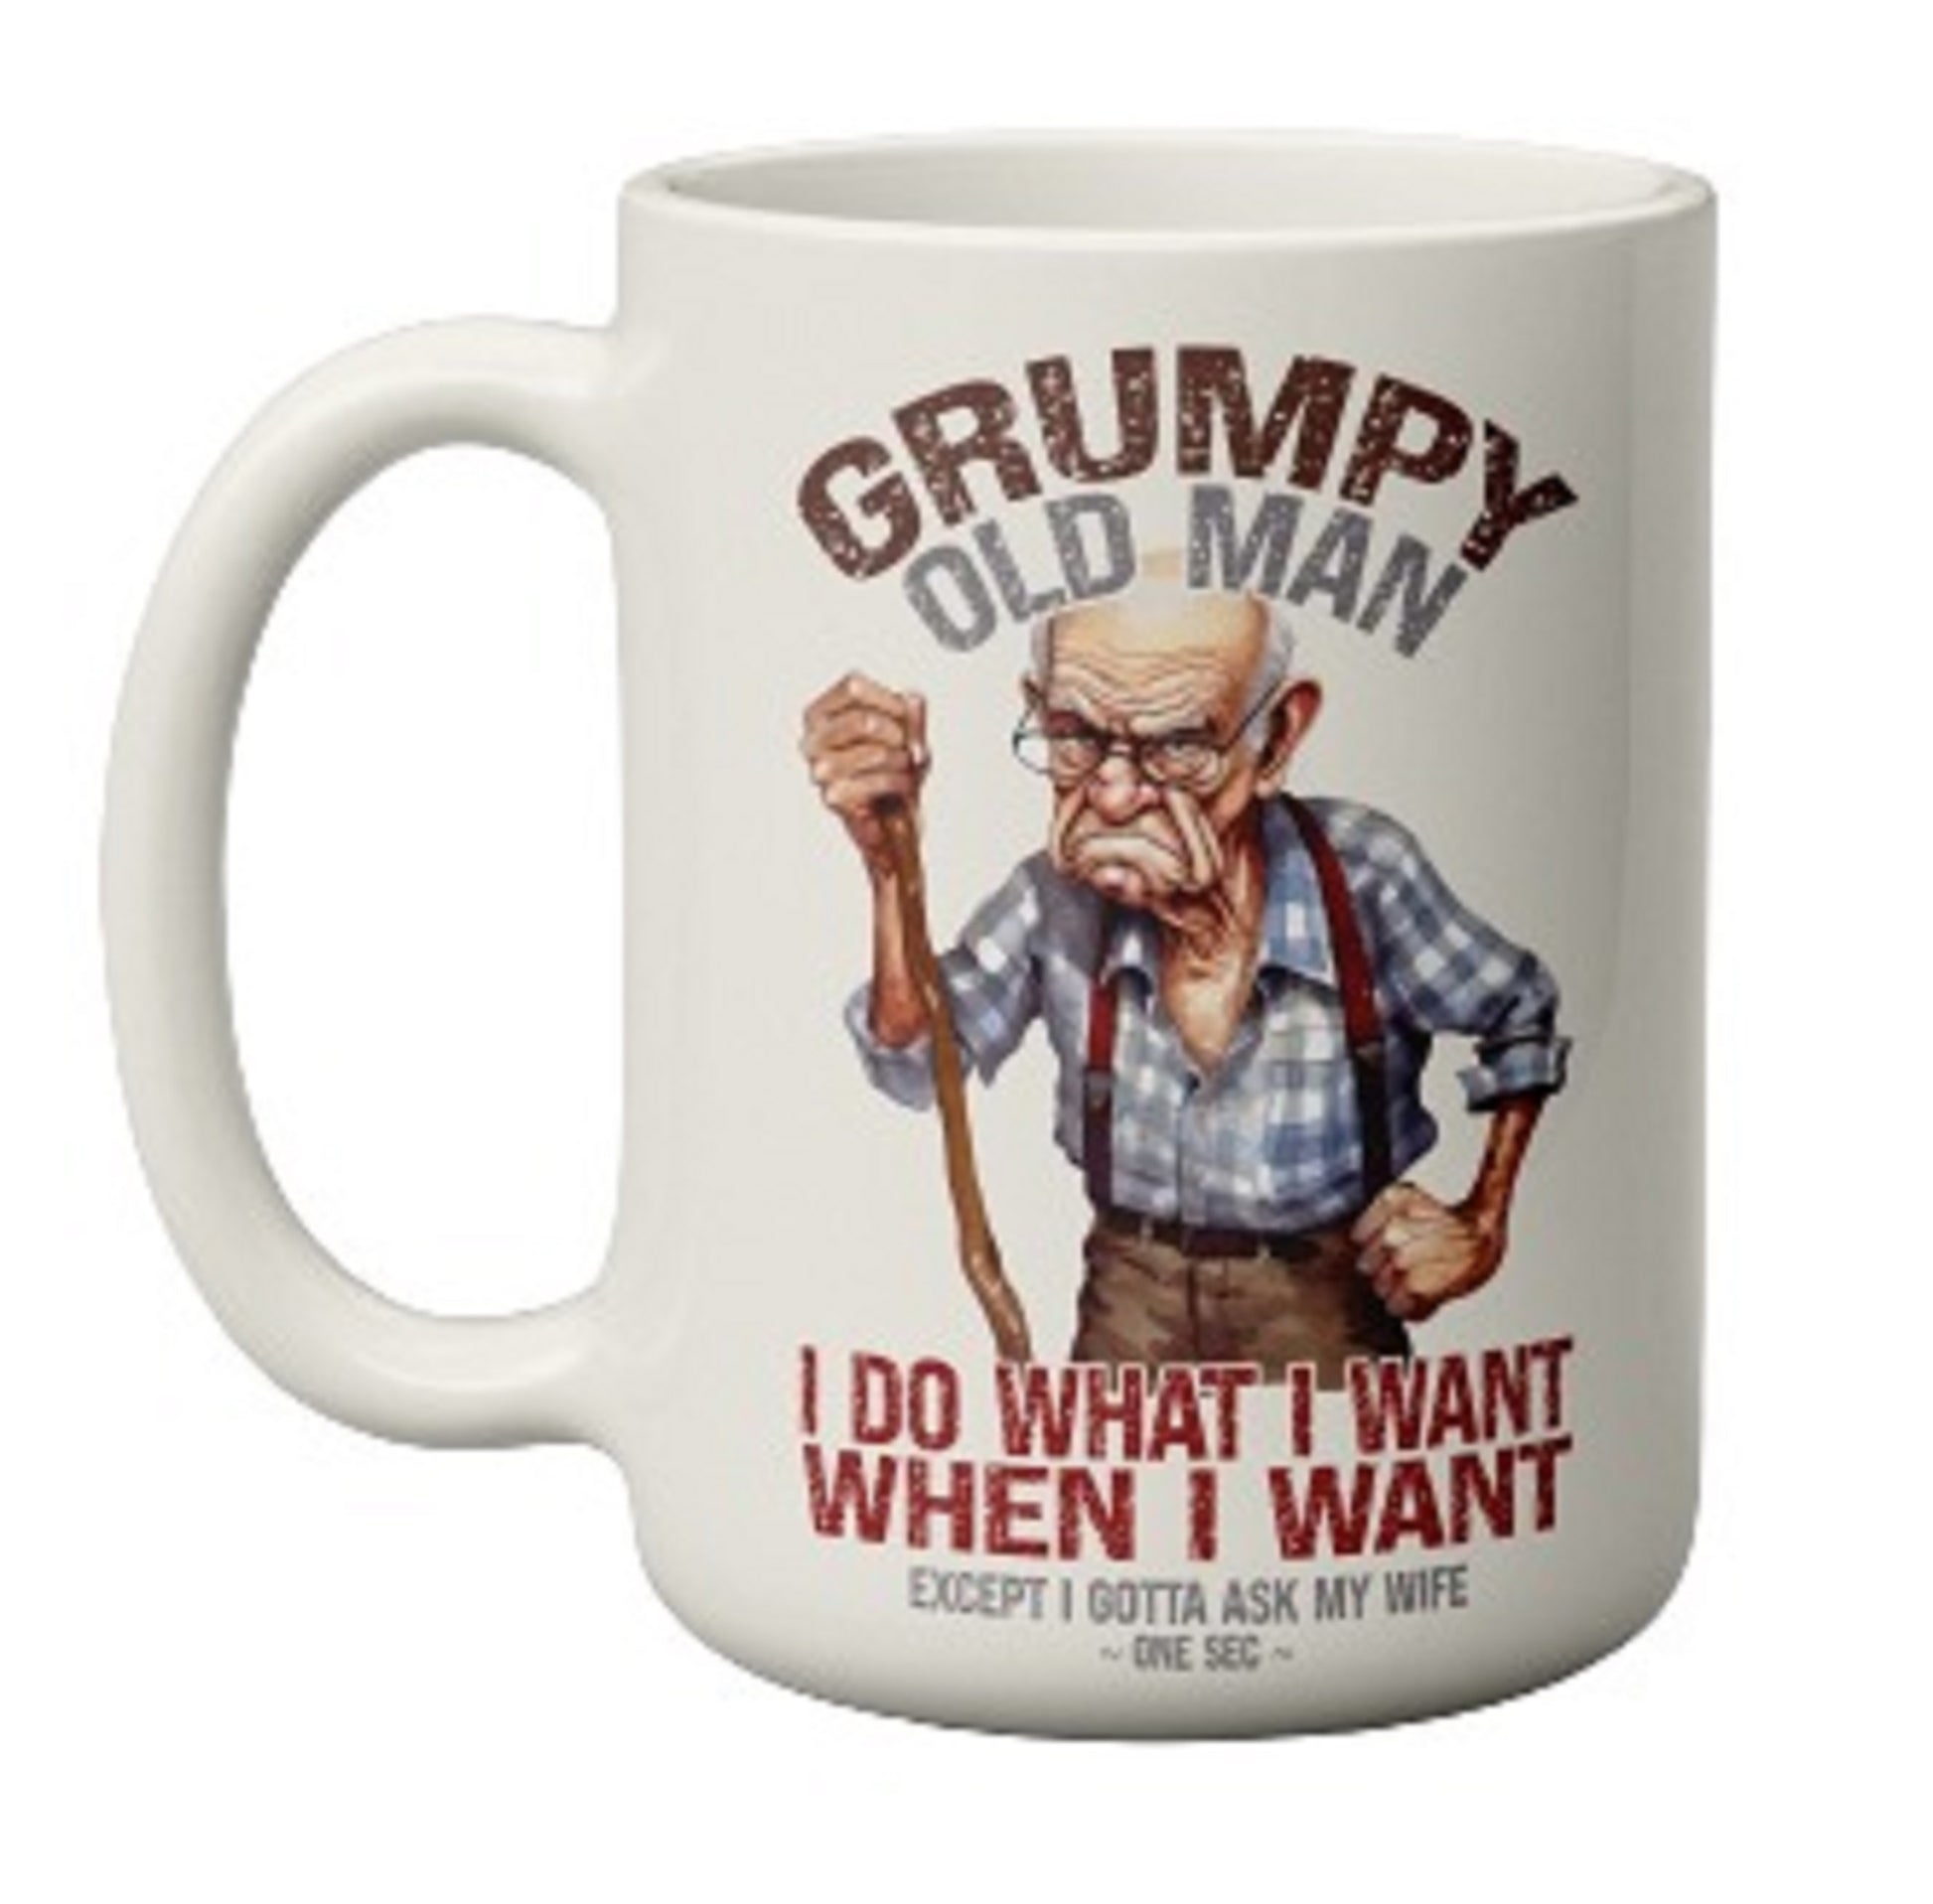  Funny Grumpy Old Man Mug by Free Spirit Accessories sold by Free Spirit Accessories